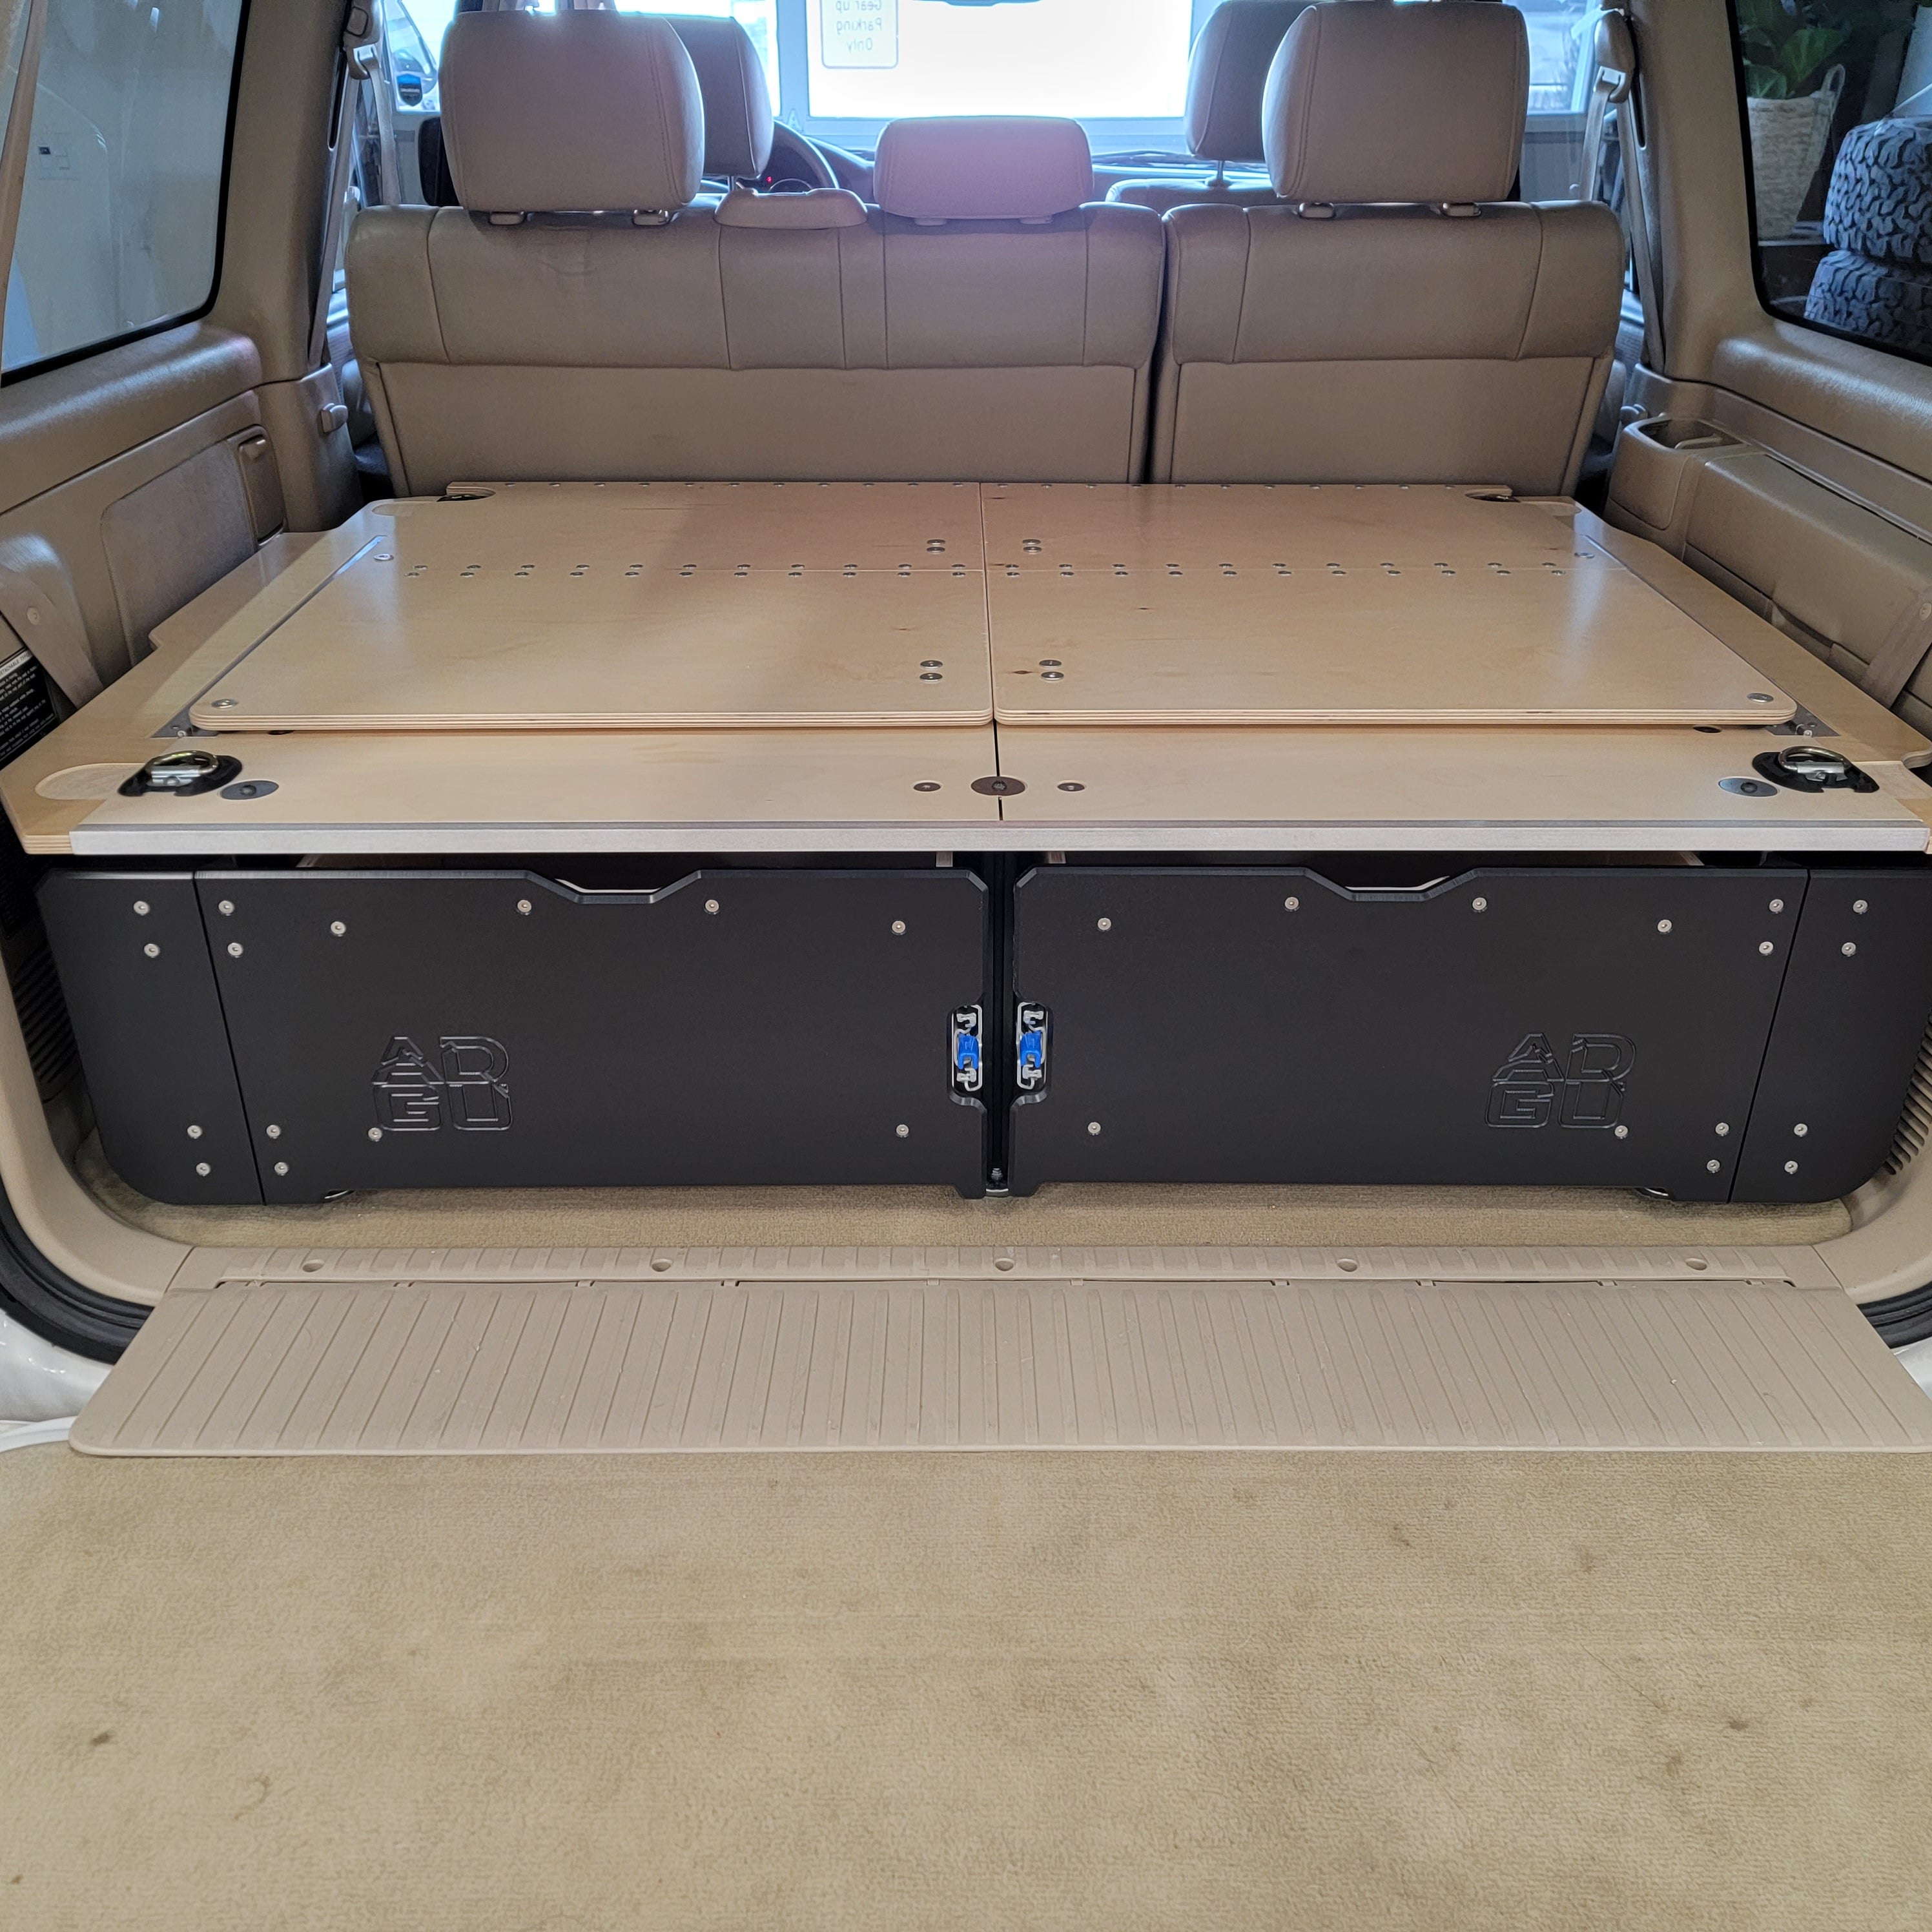 100 Series Toyota Land Cruiser LX470 drawer system with sleeping platform for vehicle organization